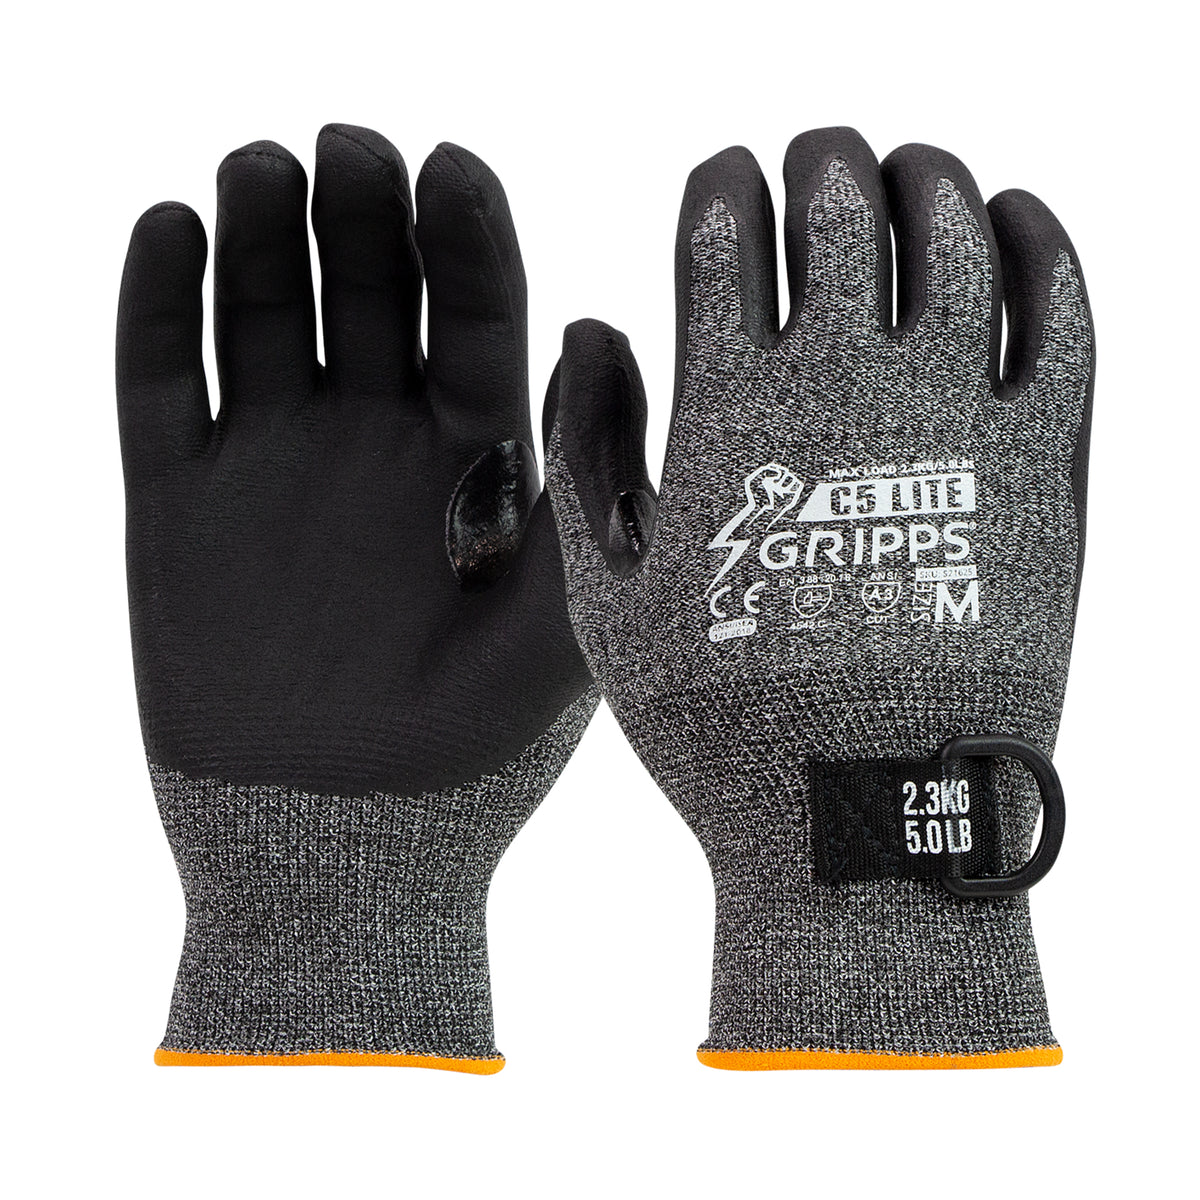 C5 FlexiLite MKII Gloves - 2.3kg / 5lb